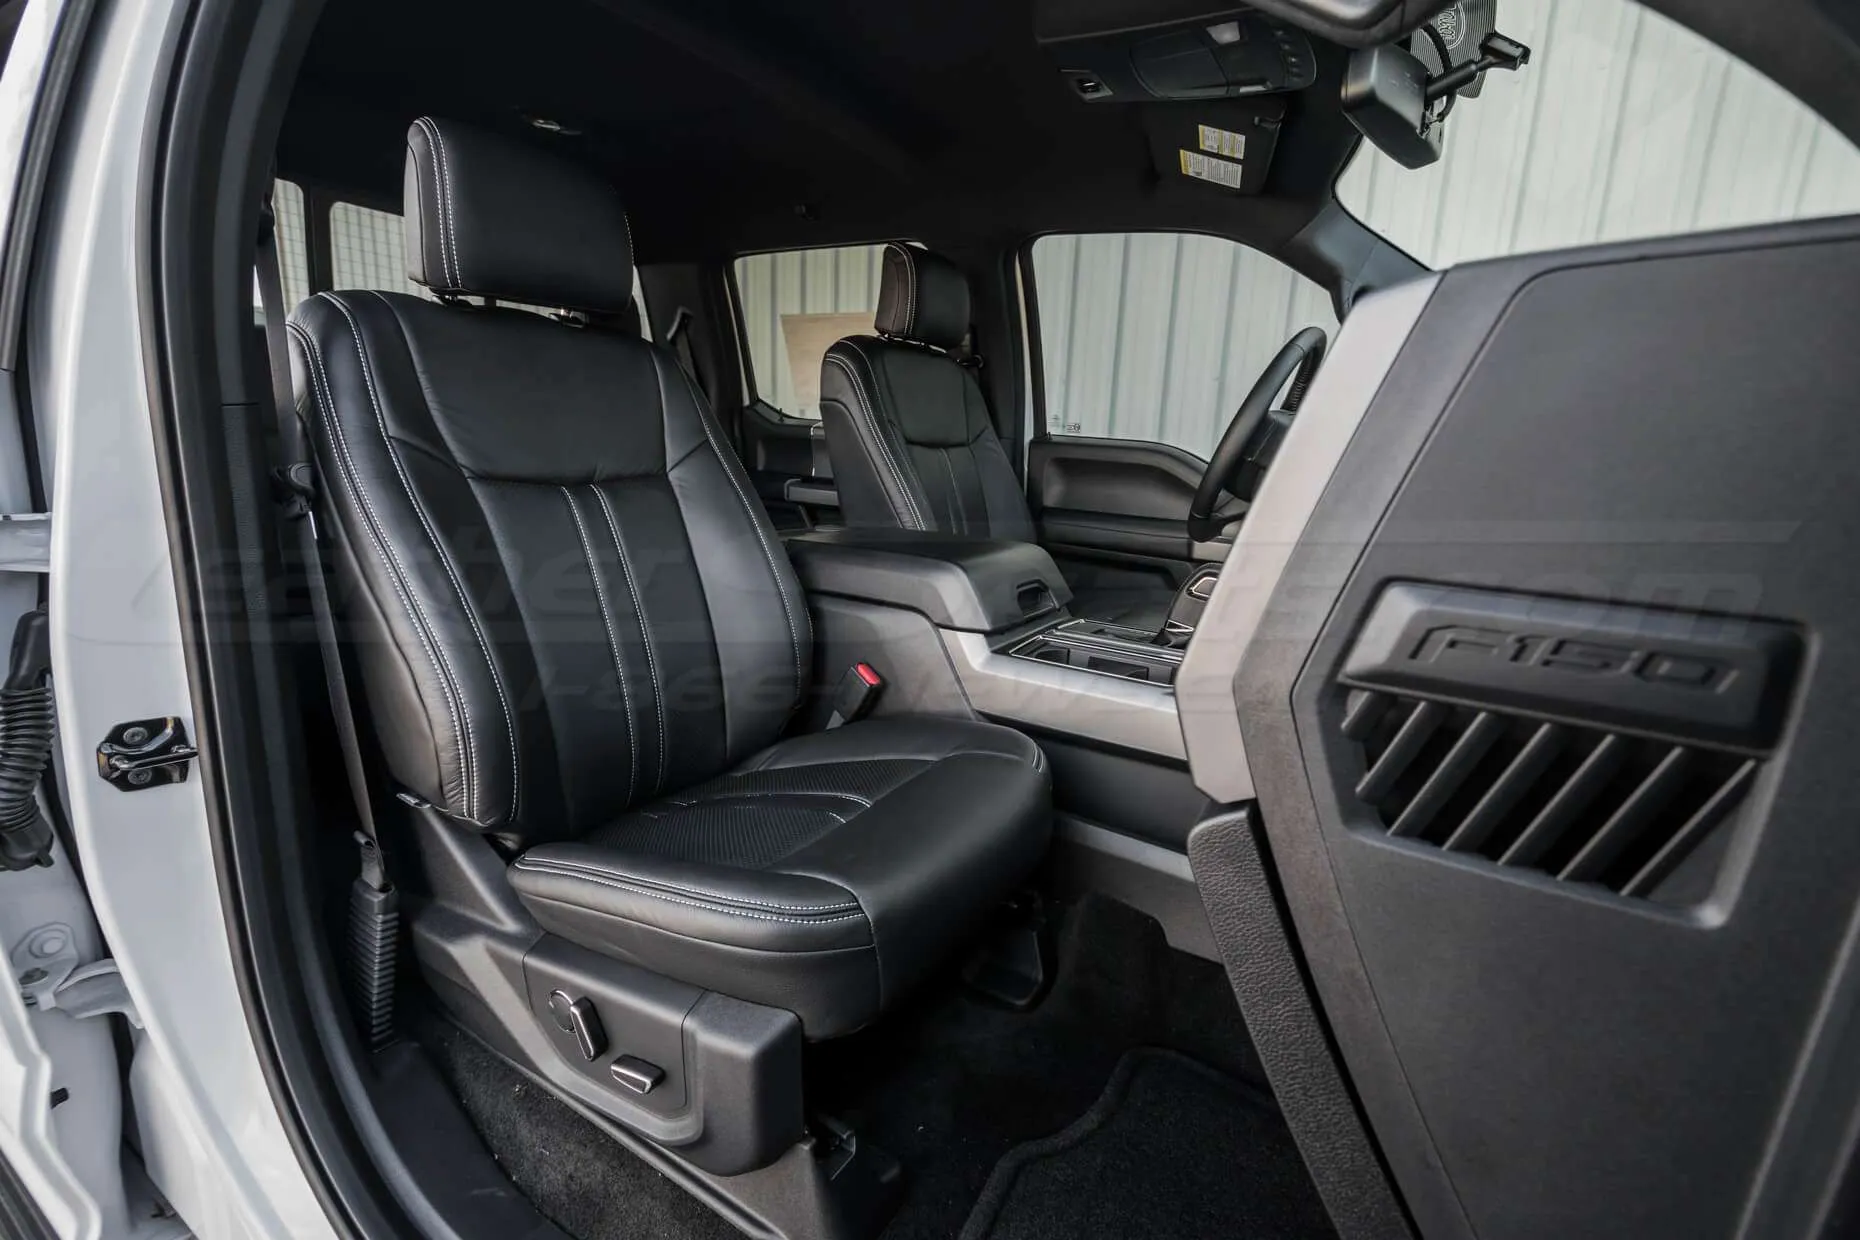 Ford F-150 Upholstery Kit - Black - Installed - Front passenger seat